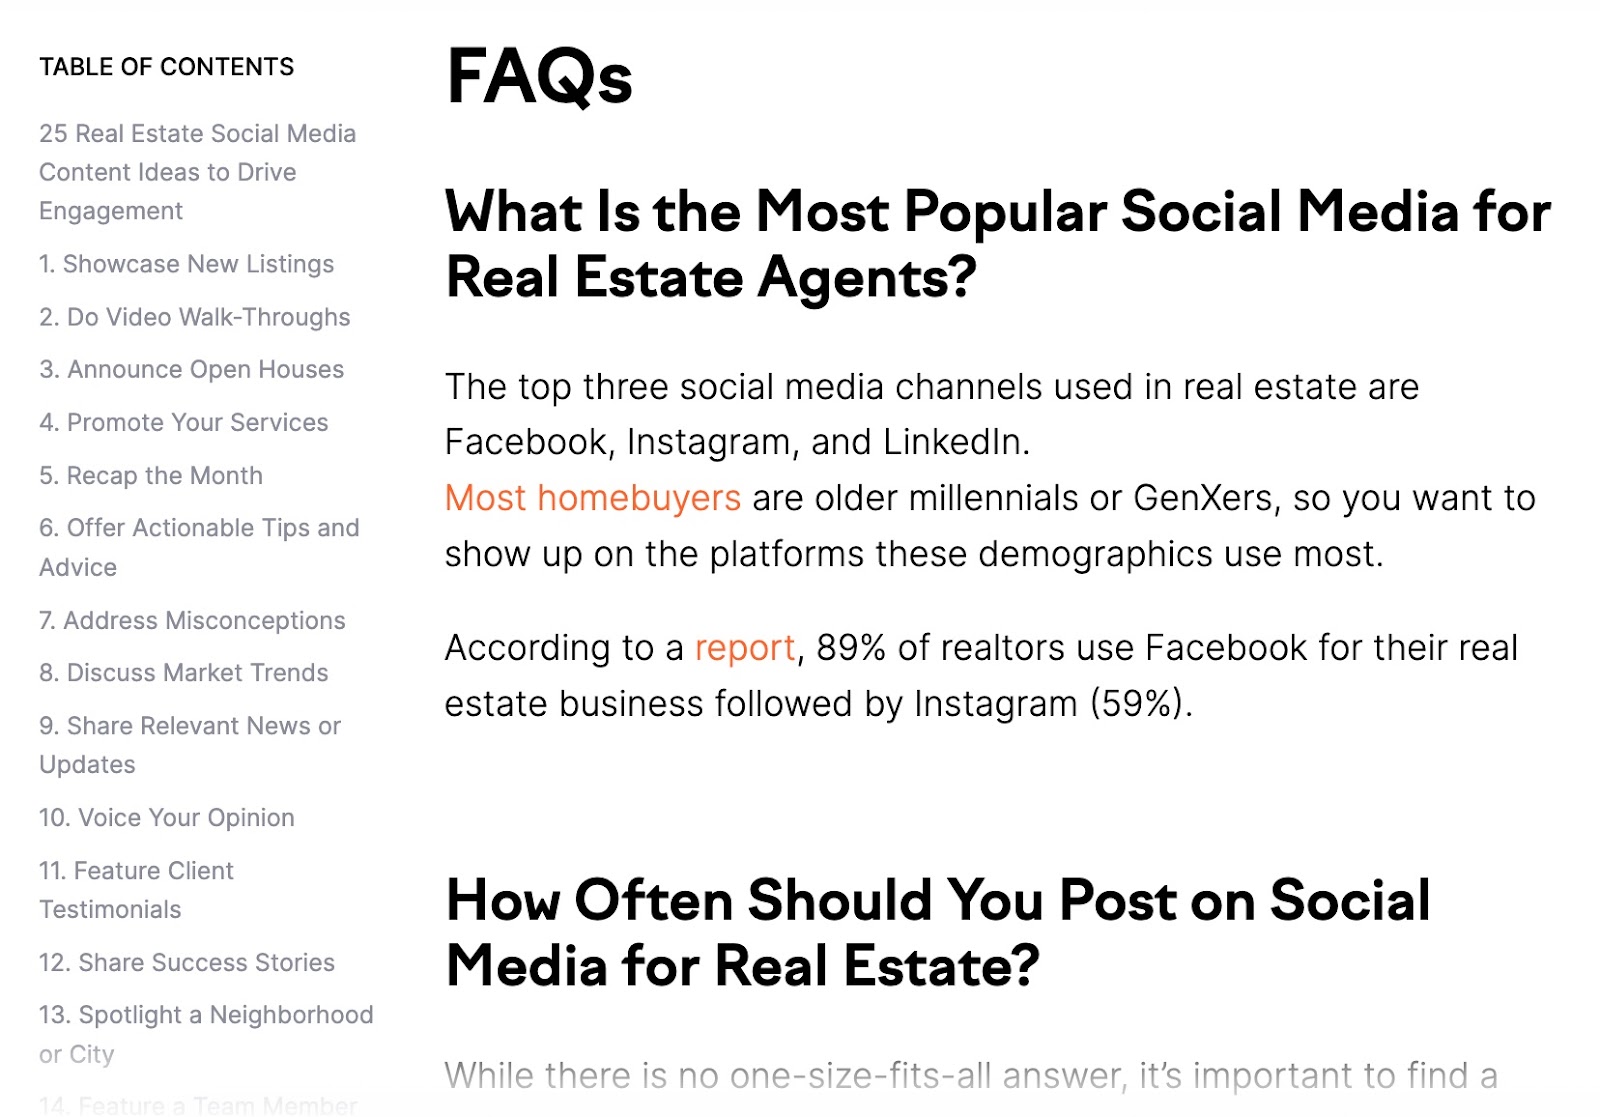 FAQs section of Semrush' article on social media for real estate